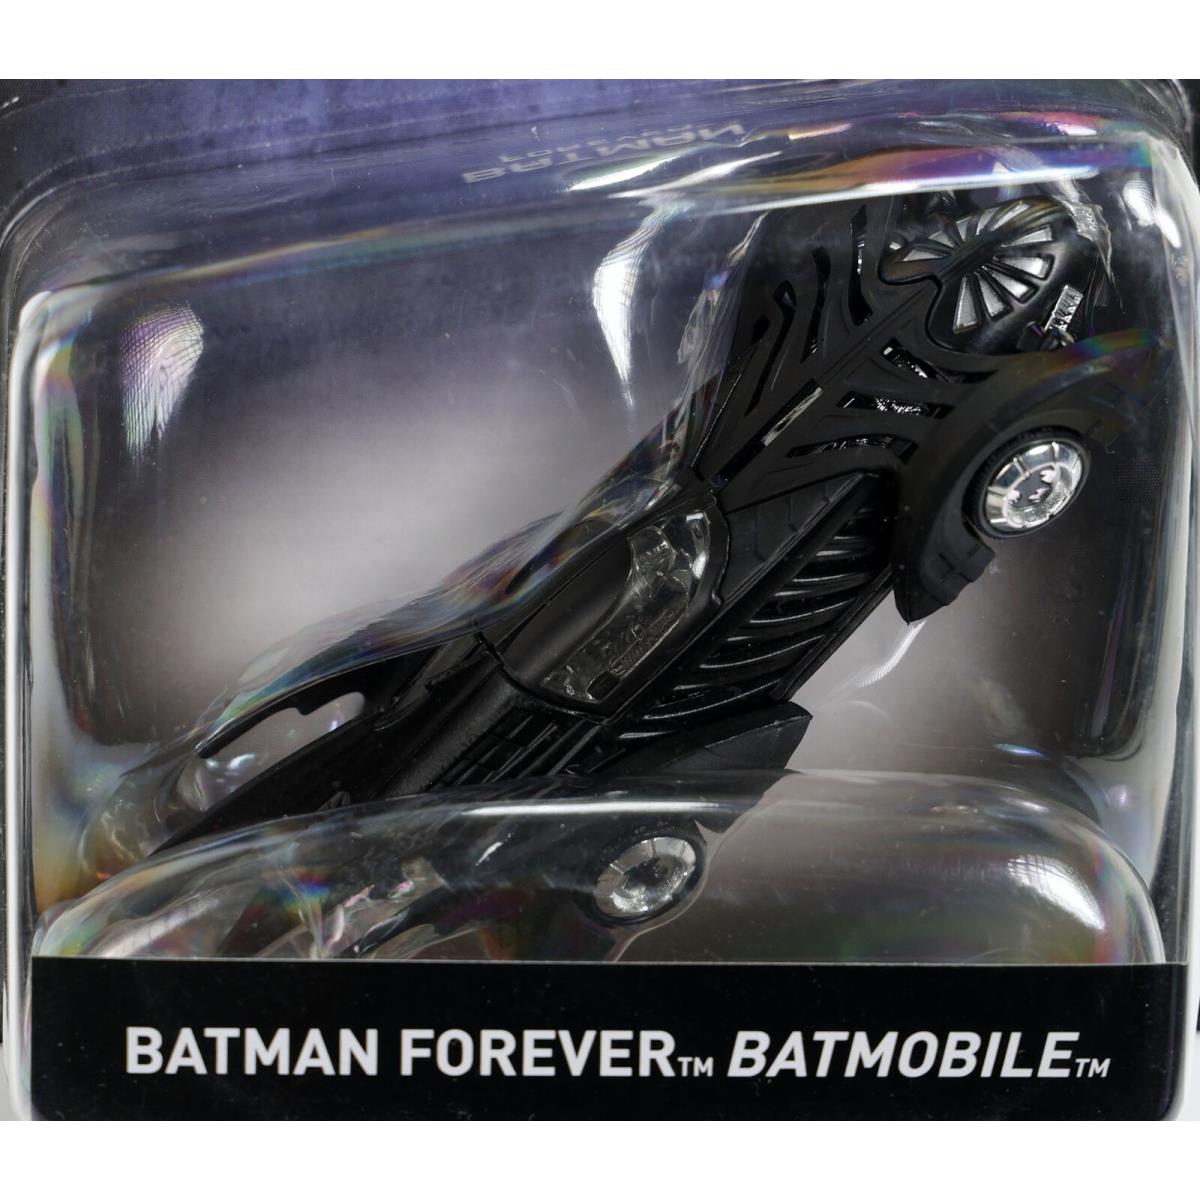 Hot Wheels Batmobile Batman Forever Series DKL29 Nrfp 2015 Black 1:50